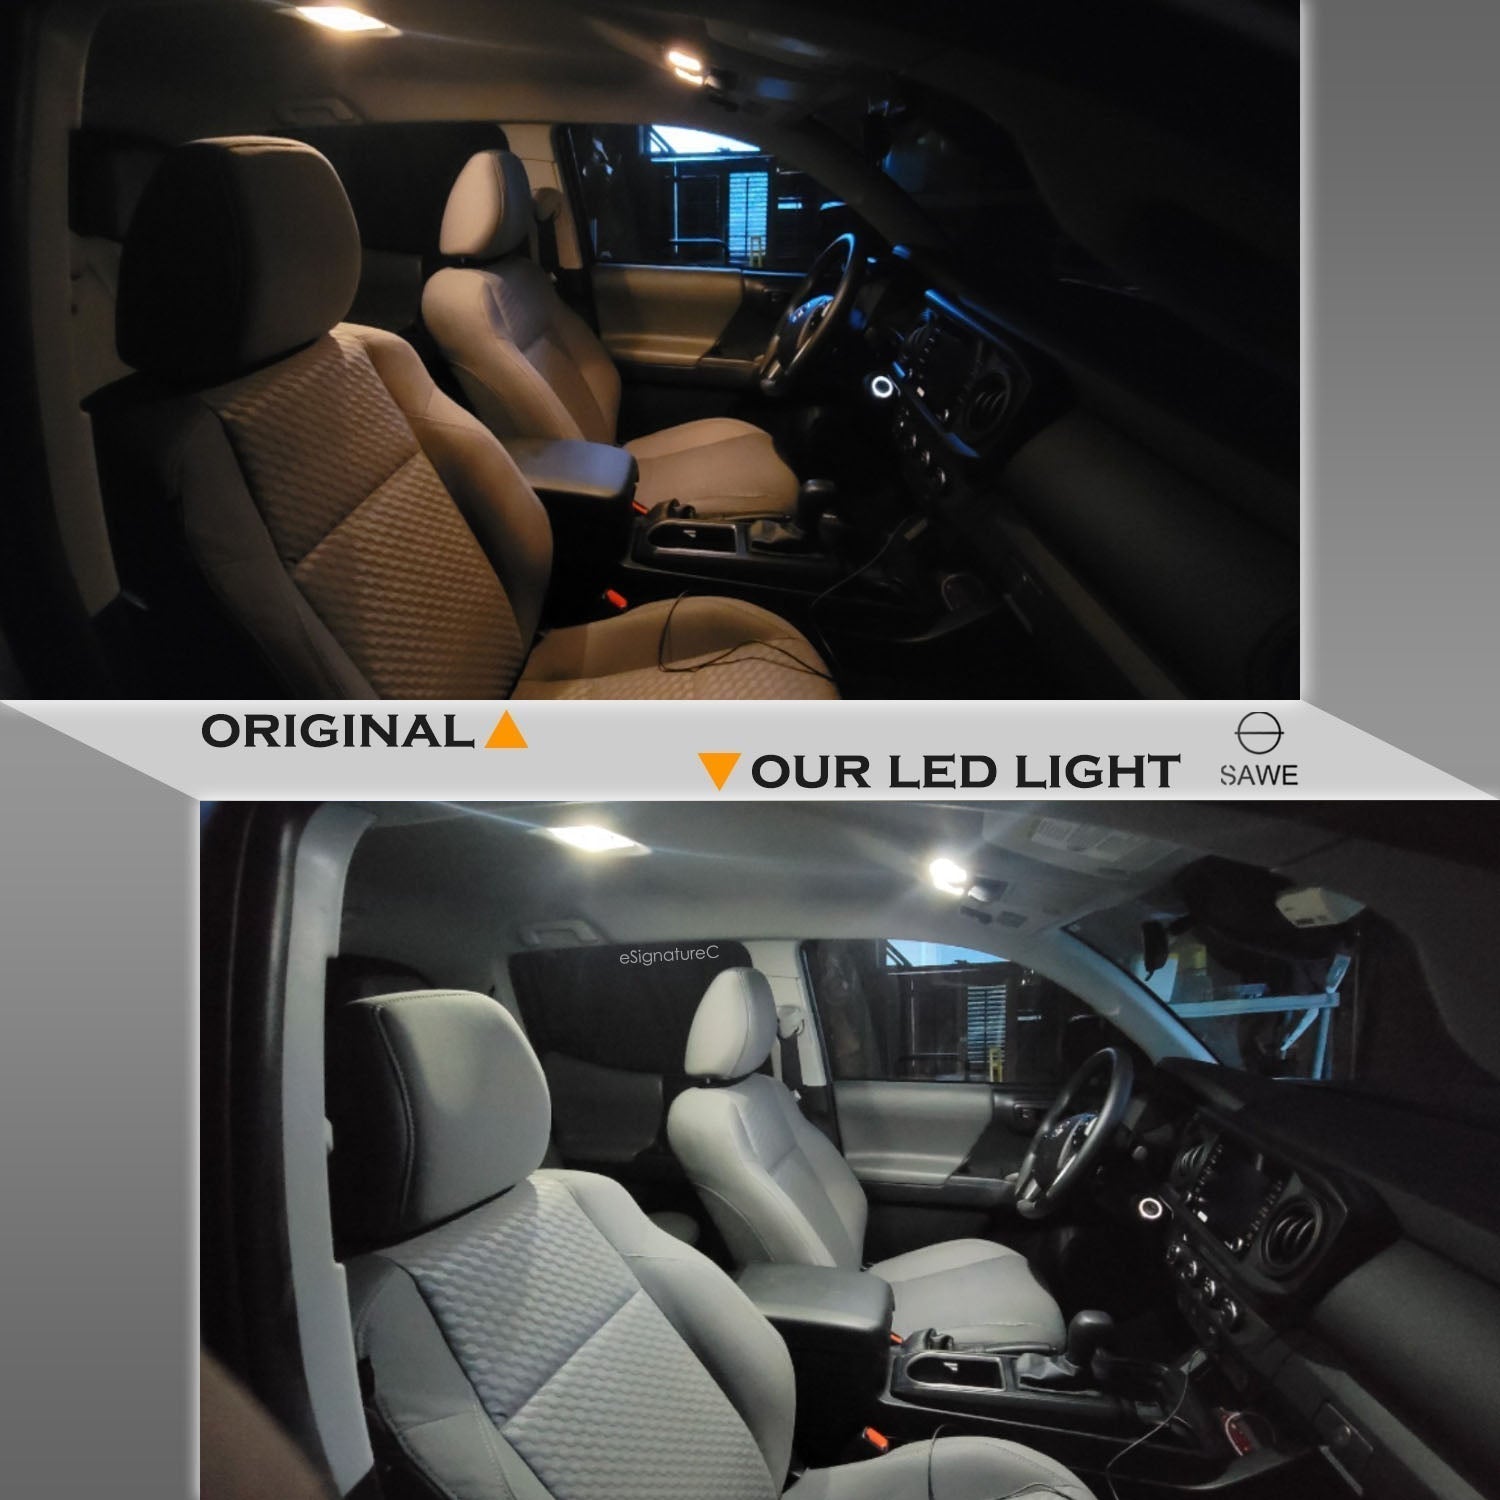 For Chevrolet Suburban Interior LED Lights - Dome & Map Lights Package Kit for 2000 - 2006 - White